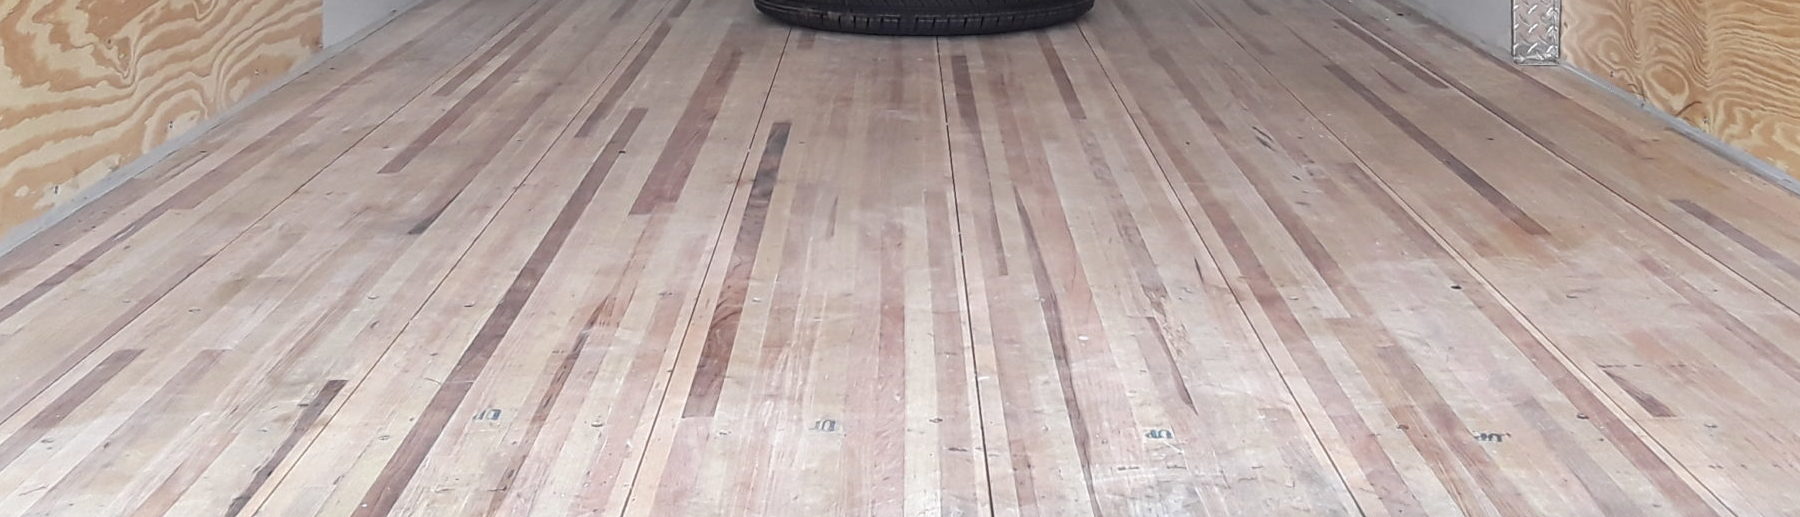 Laminated Trailer Flooring Ohc, Laminated Oak Trailer Flooring